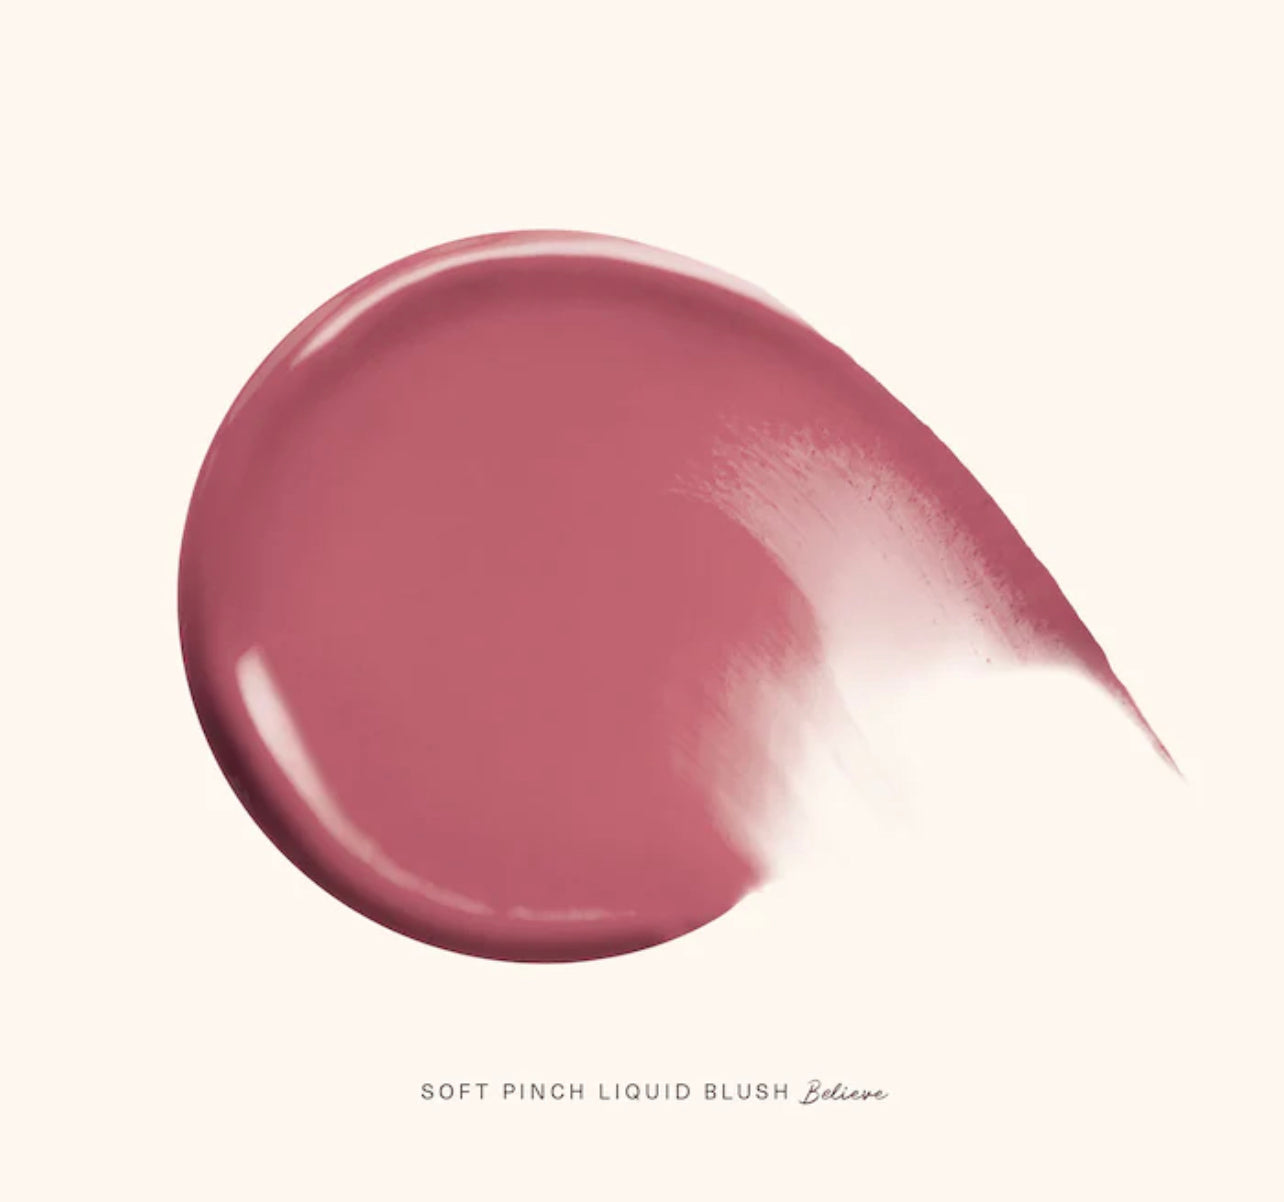 RARE BEAUTY BY SELENA GOMEZ, Soft Pinch Liquid Blush